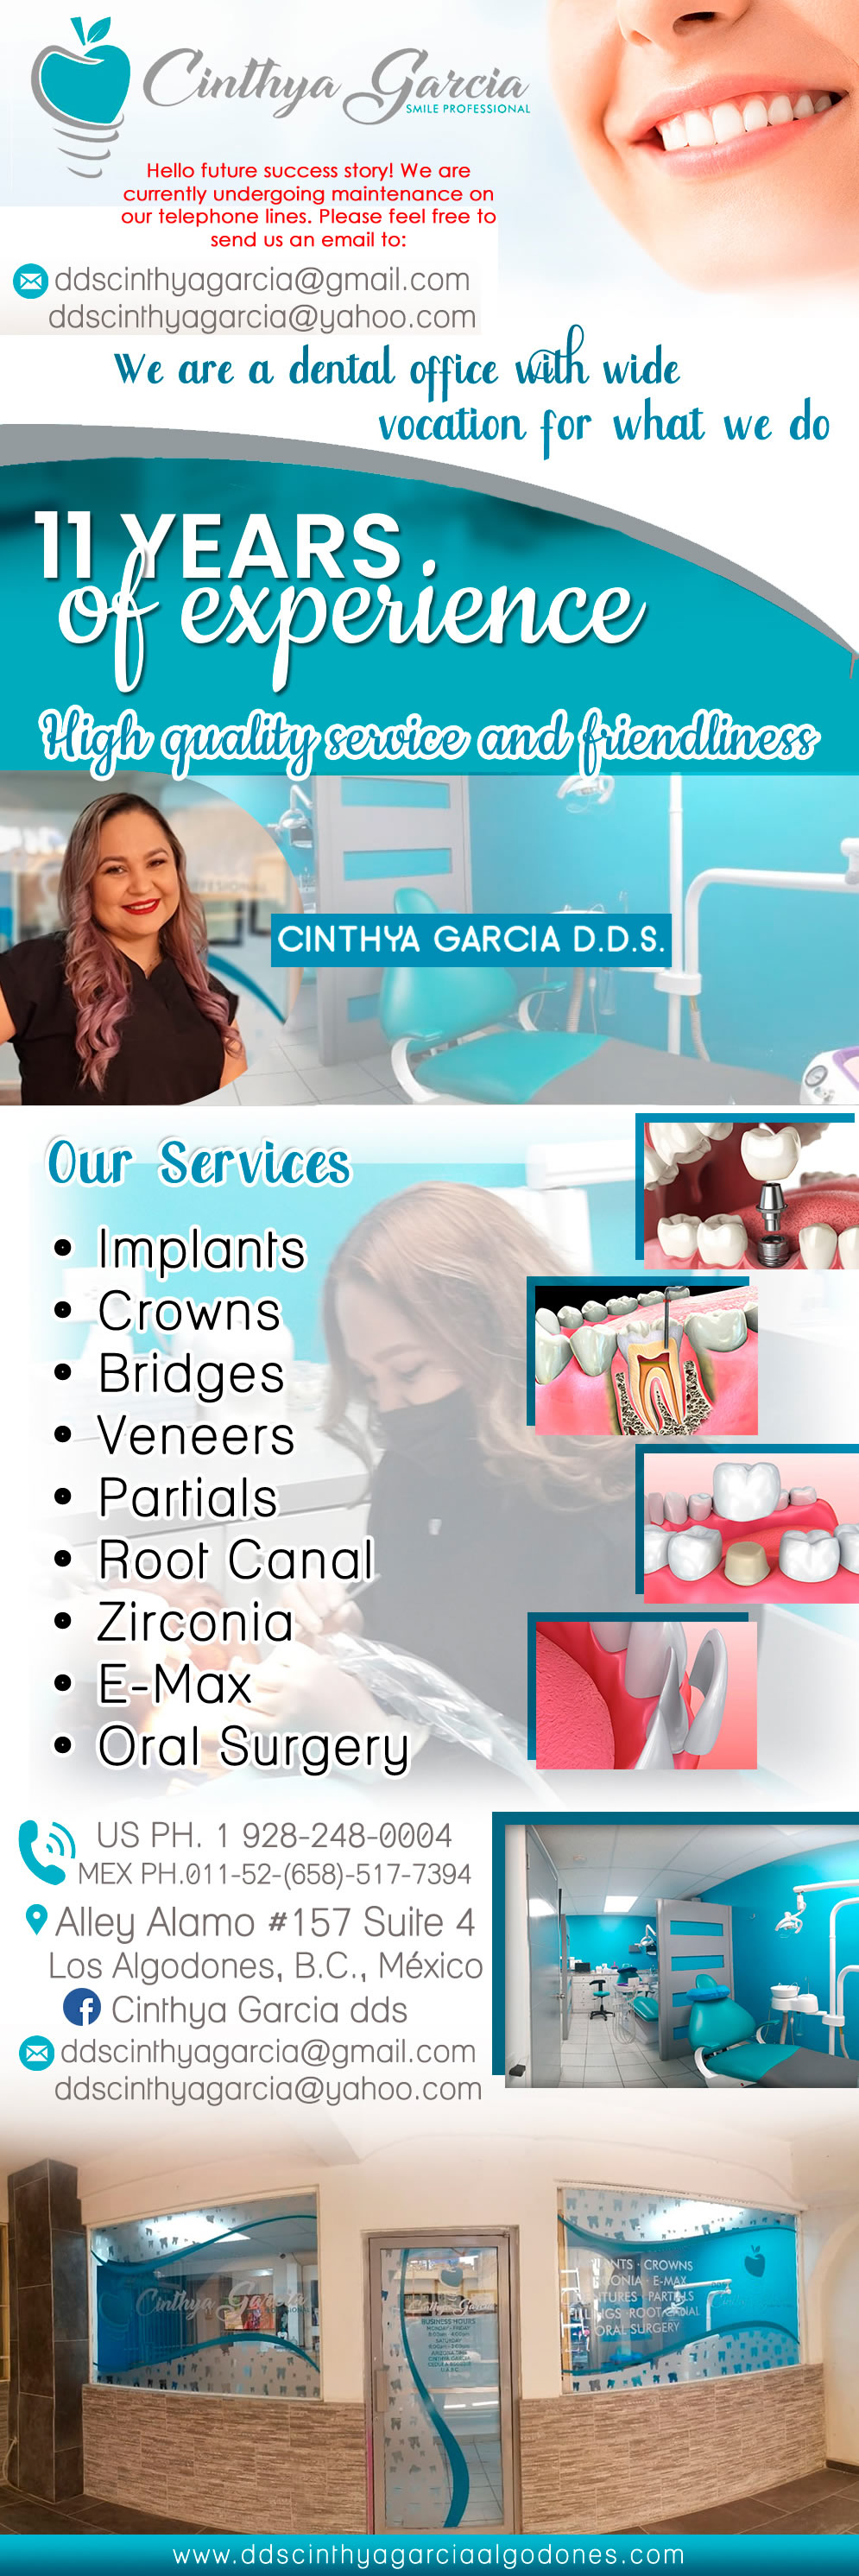 Cinthya Garcia D.D.S. SMILE PROFESSIONAL-Crowns
Bridges
Venners
Dentures
Implants
Fillings
Partials
Root Canal 
Zirconia 
E-Max
Oral Surgery            